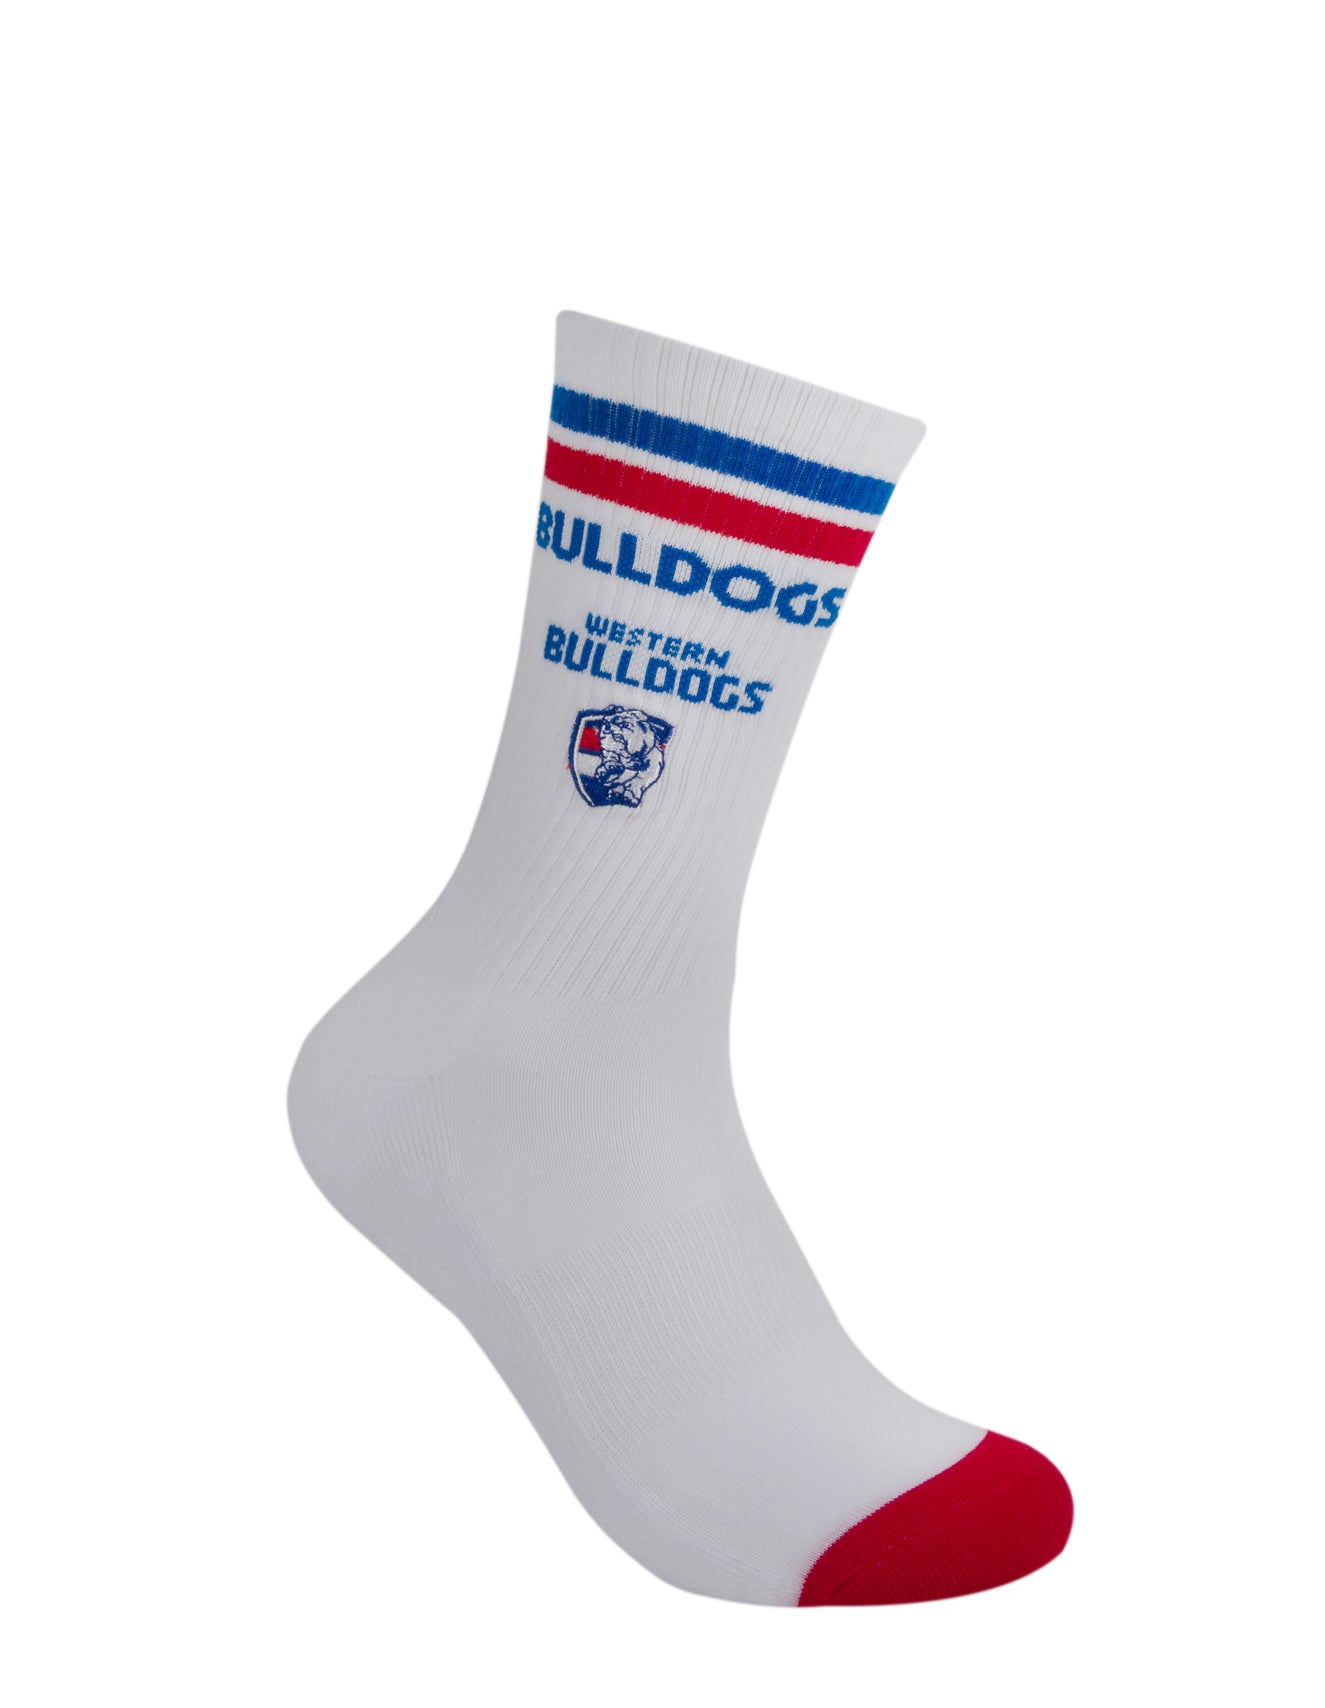 Western Bulldogs Mascot Sneaker Socks 2 Pack